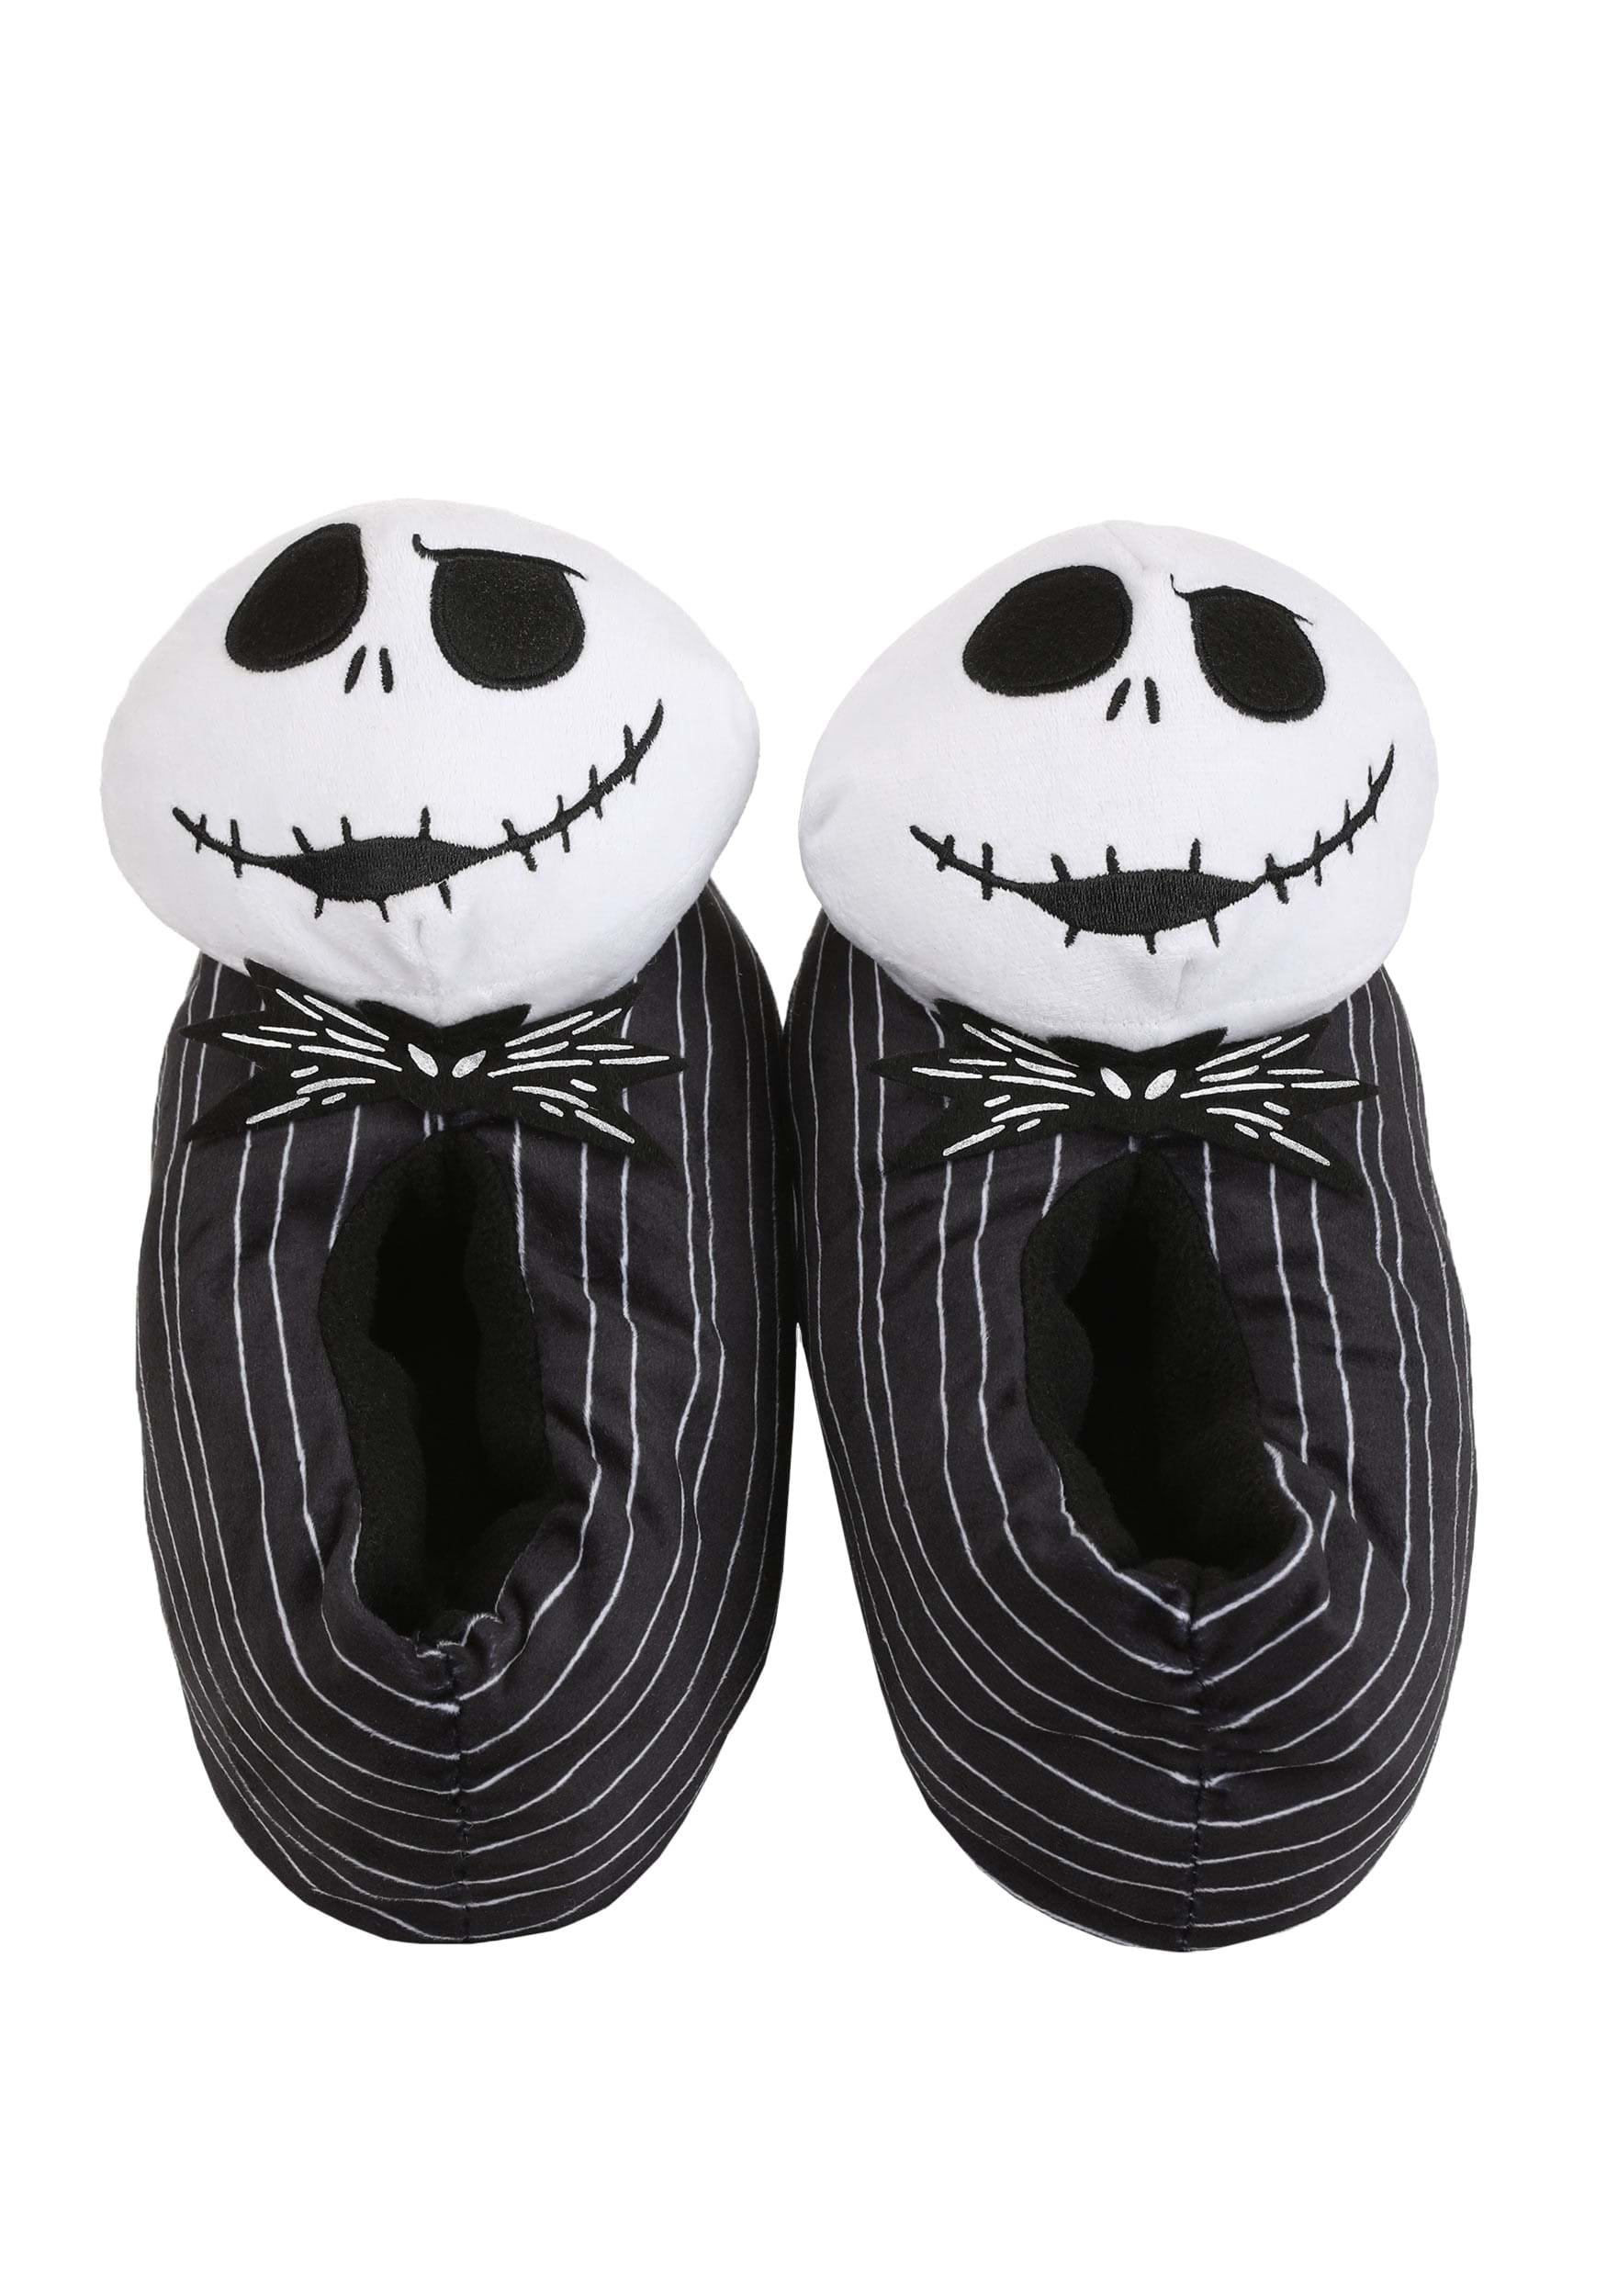 The Nightmare Before Christmas Jack Skellington B&W Halloween Crocs Shoes